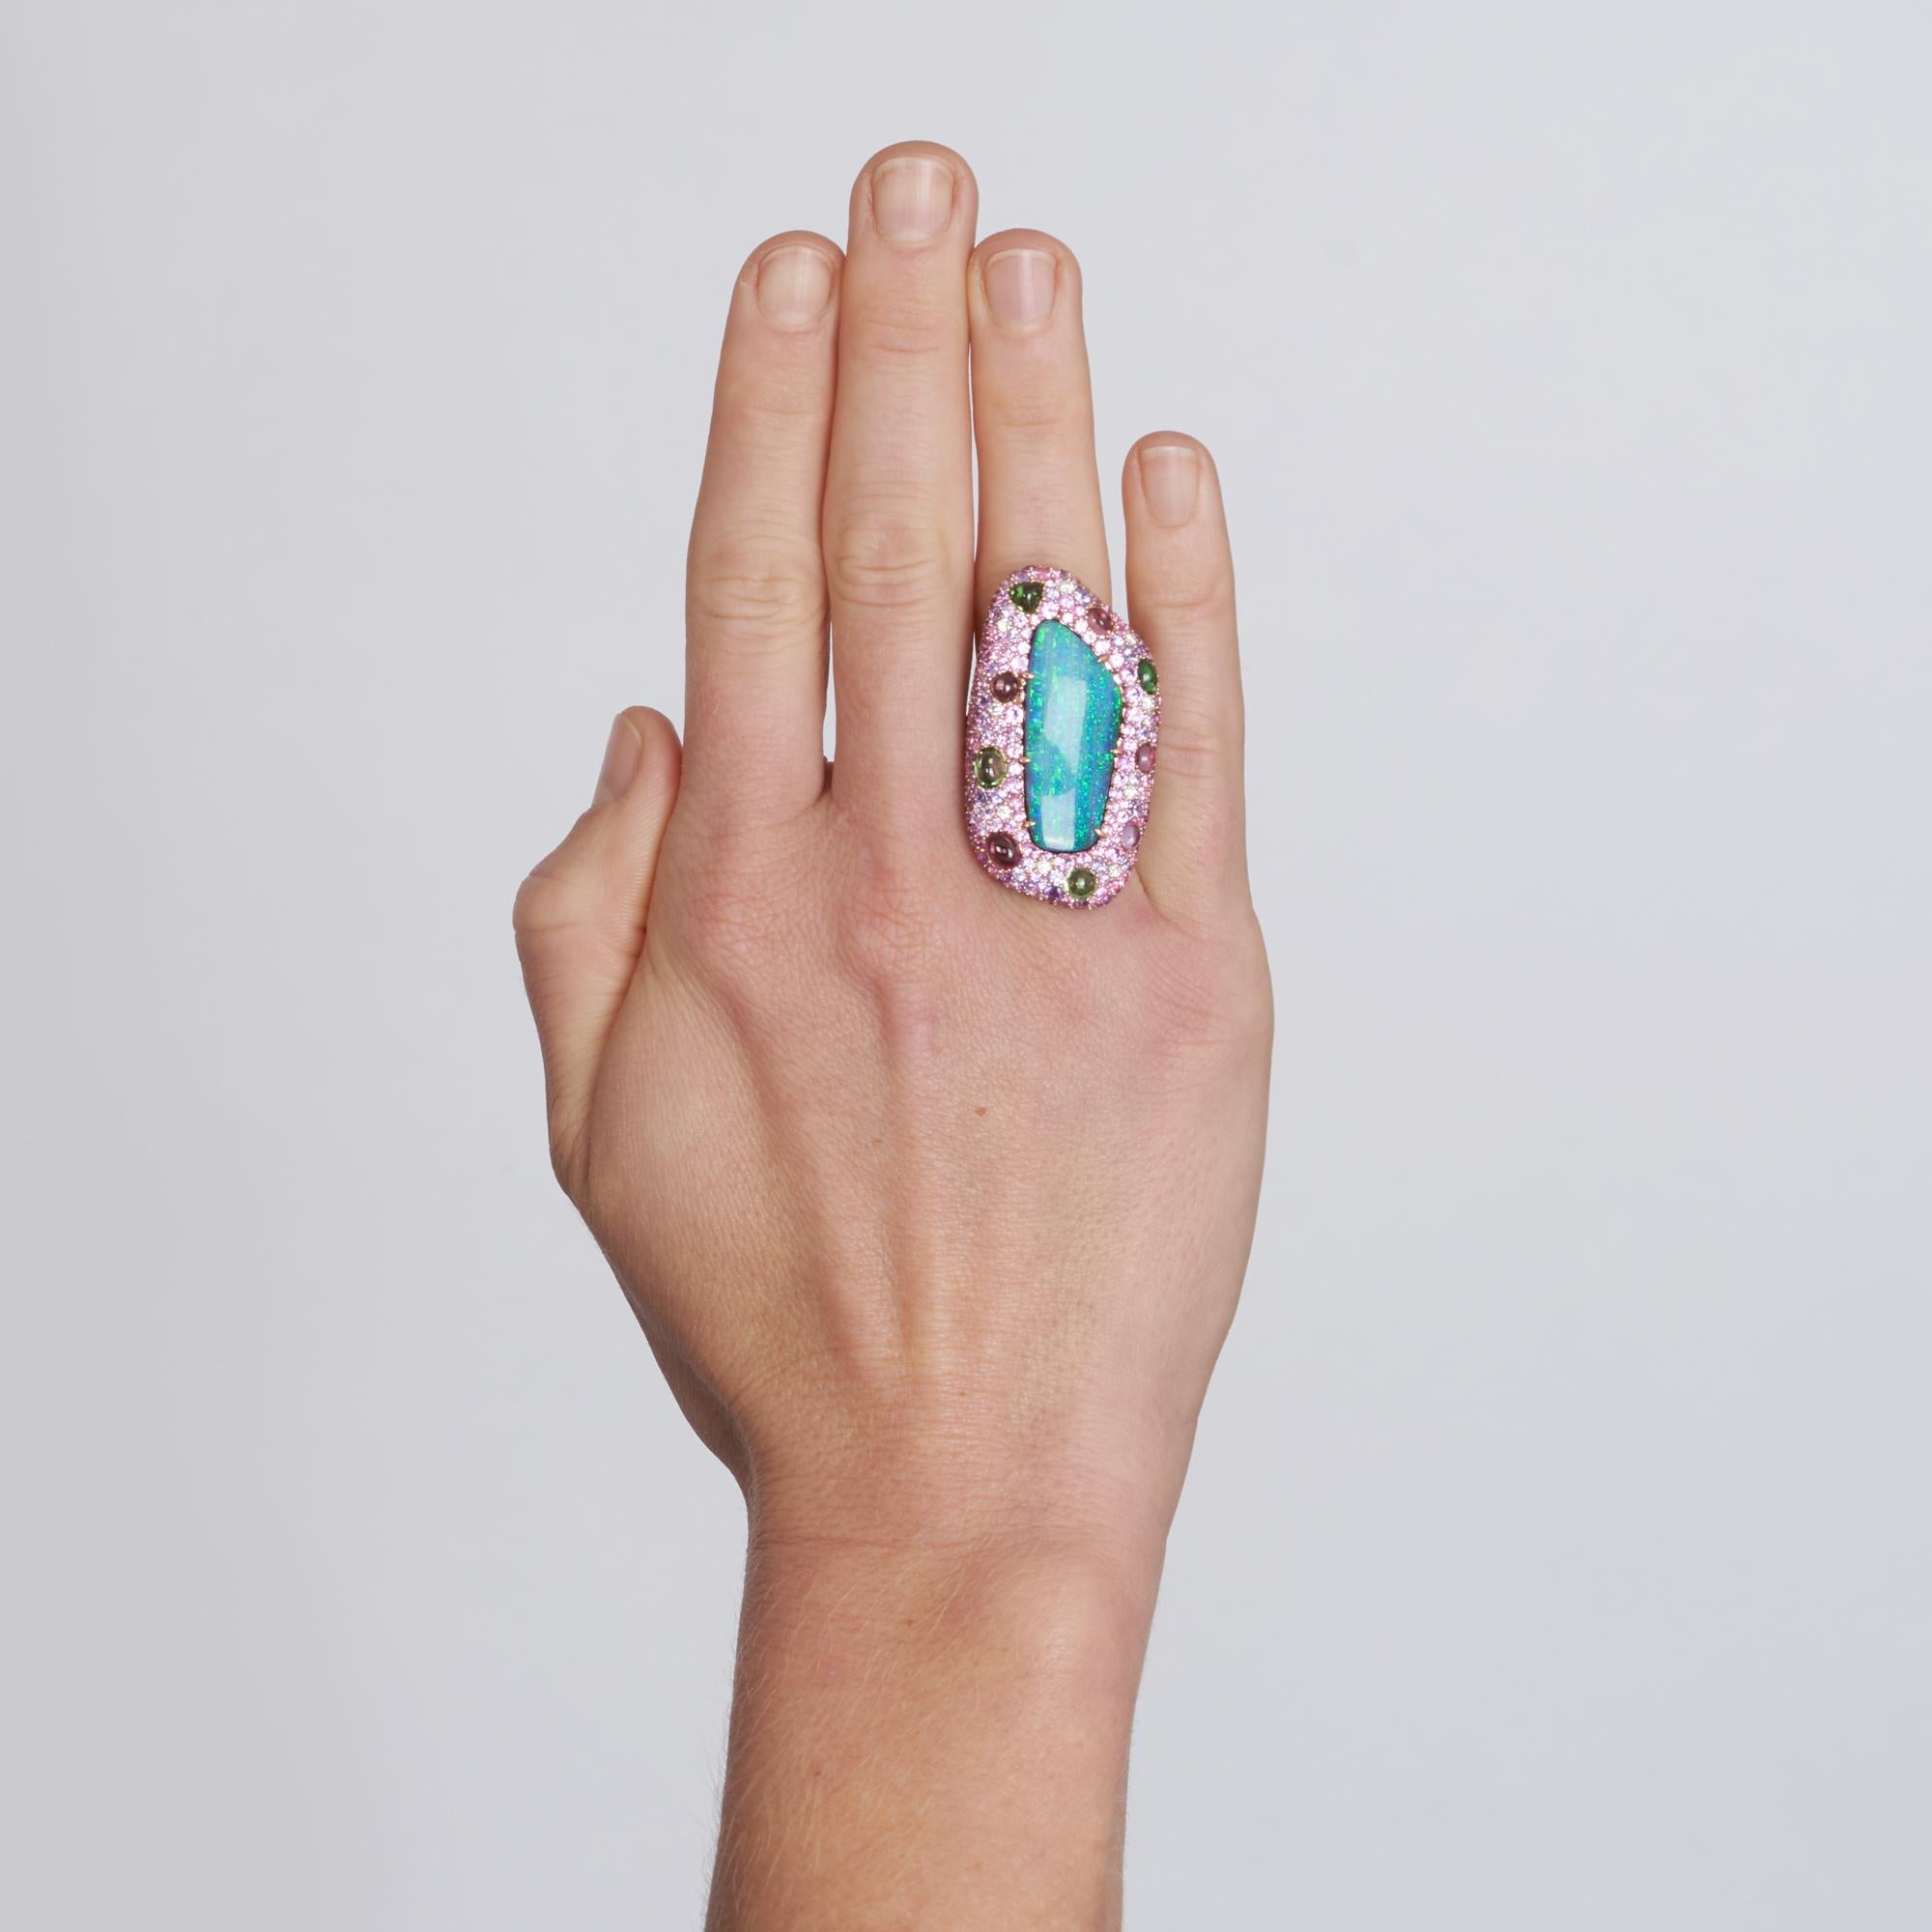 Brilliant Cut Margot McKinney 18 Karat Rose Gold Ring with Opal, Pink Sapphire, Amethyst